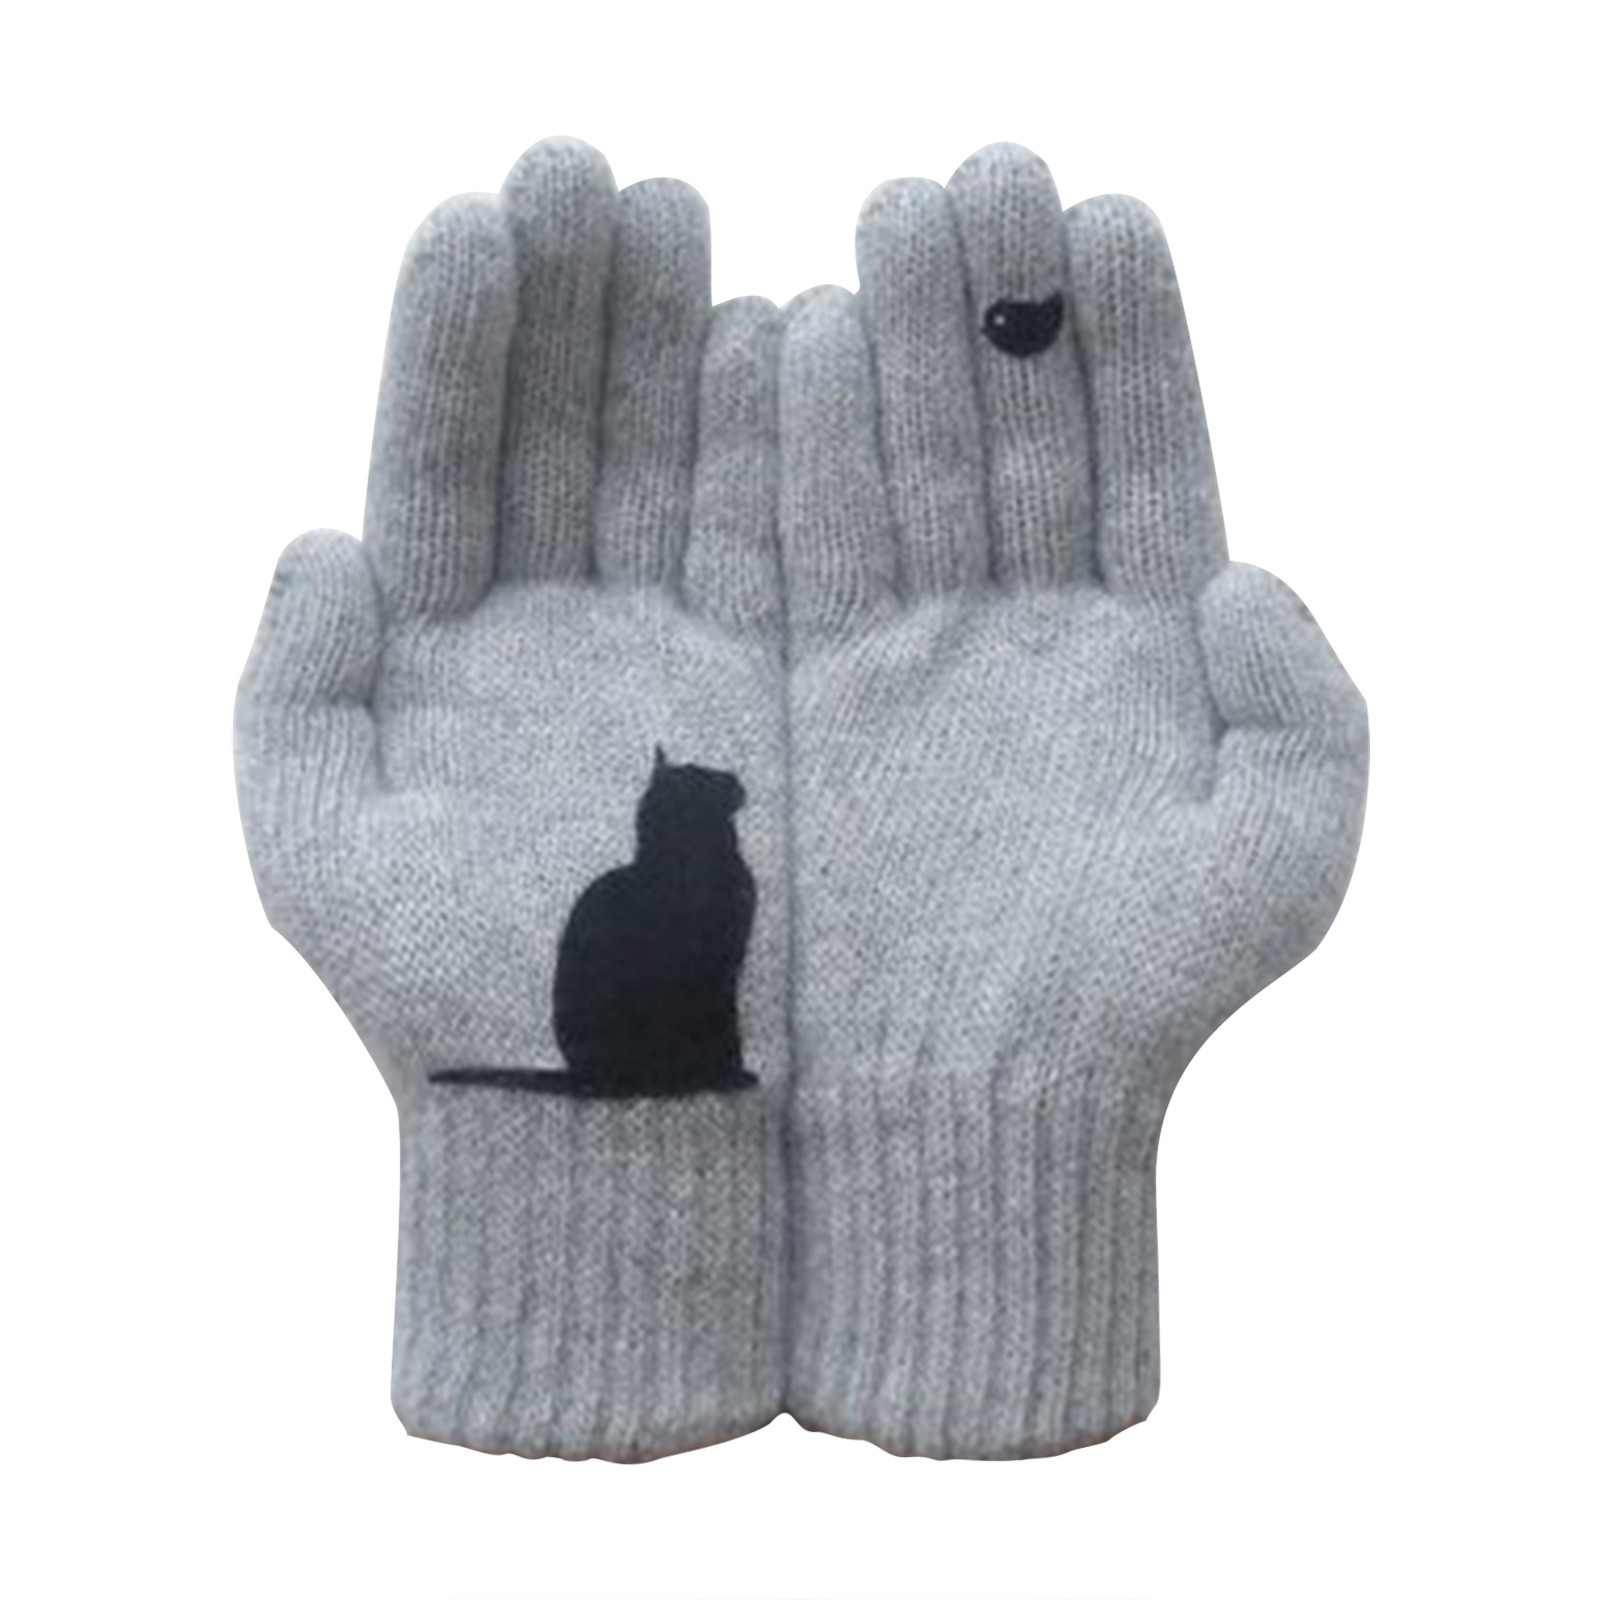 Cute Cat And Fish Print Keep Warm Winter Woolen Soft Gloves Fashion Women Gloves Ladies Outdoor Full Finger Gloves Mittens